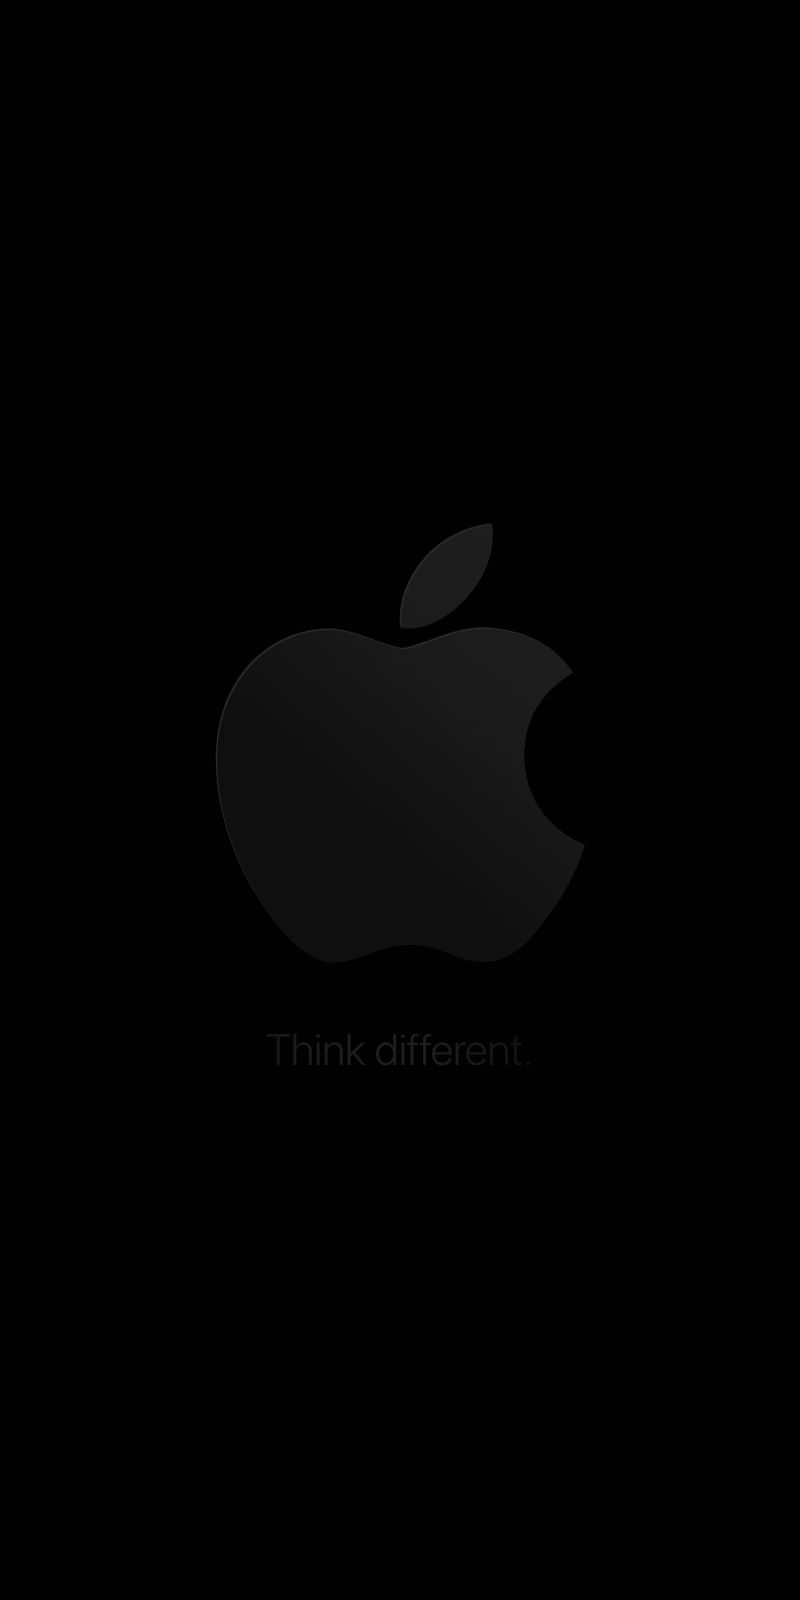 iPhone black wallpaper HD. Apple iphone wallpaper hd, iPhone wallpaper logo, Apple wallpaper